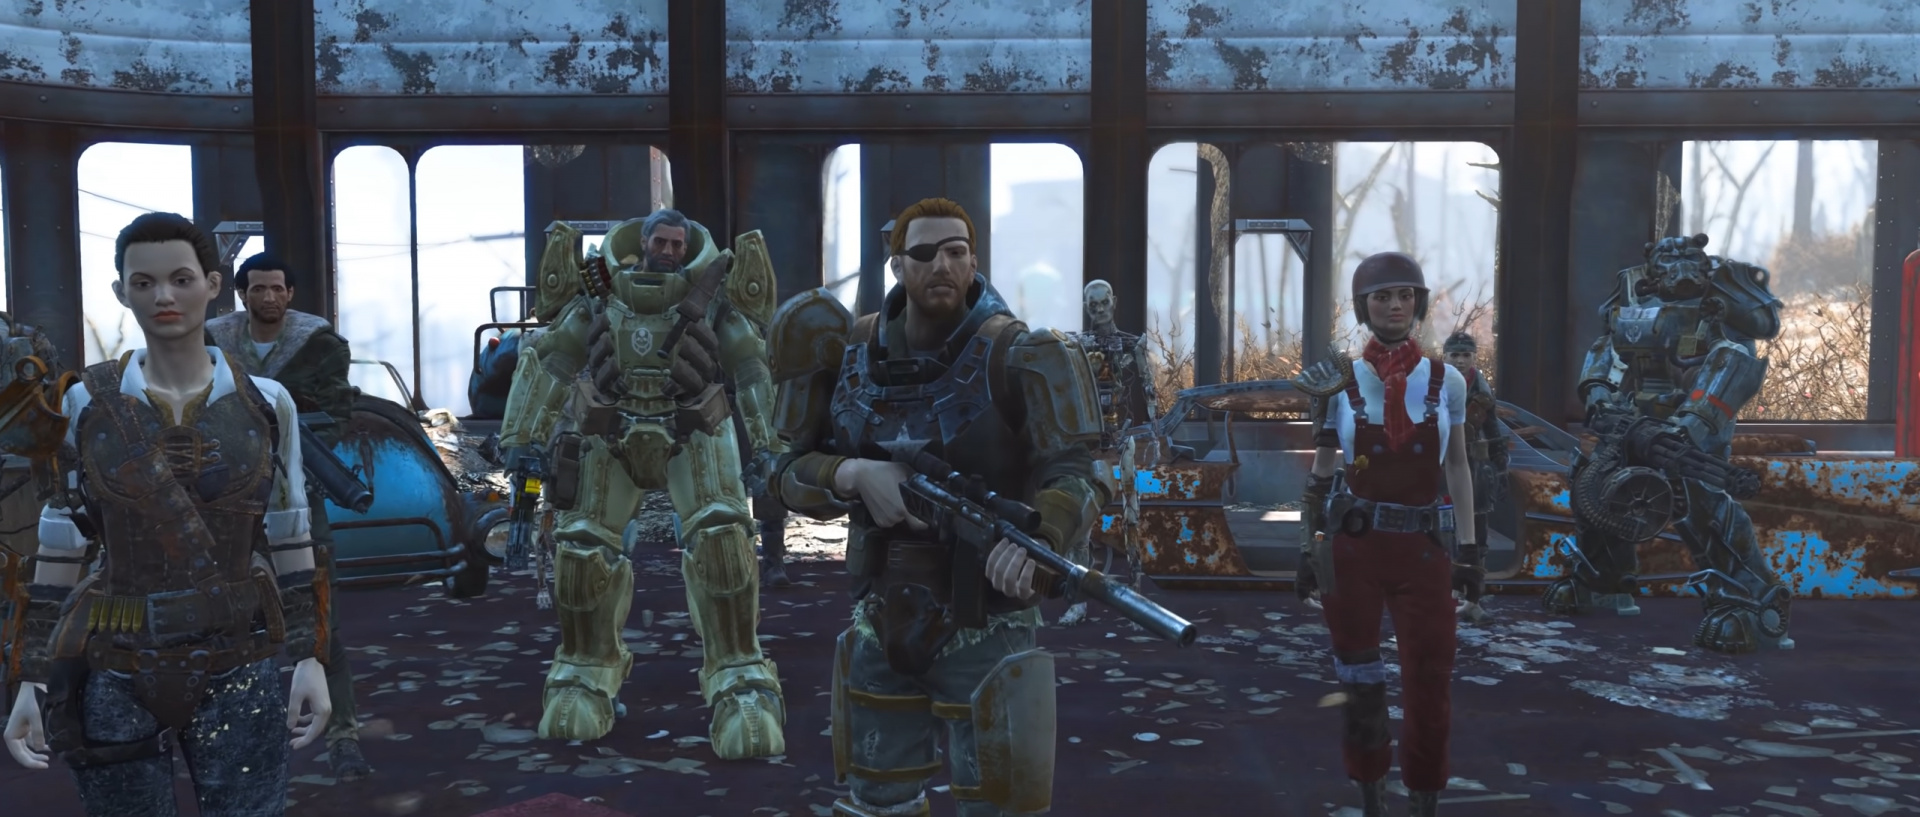 Fallout 4 sim settlements 2 где взять асам фото 1